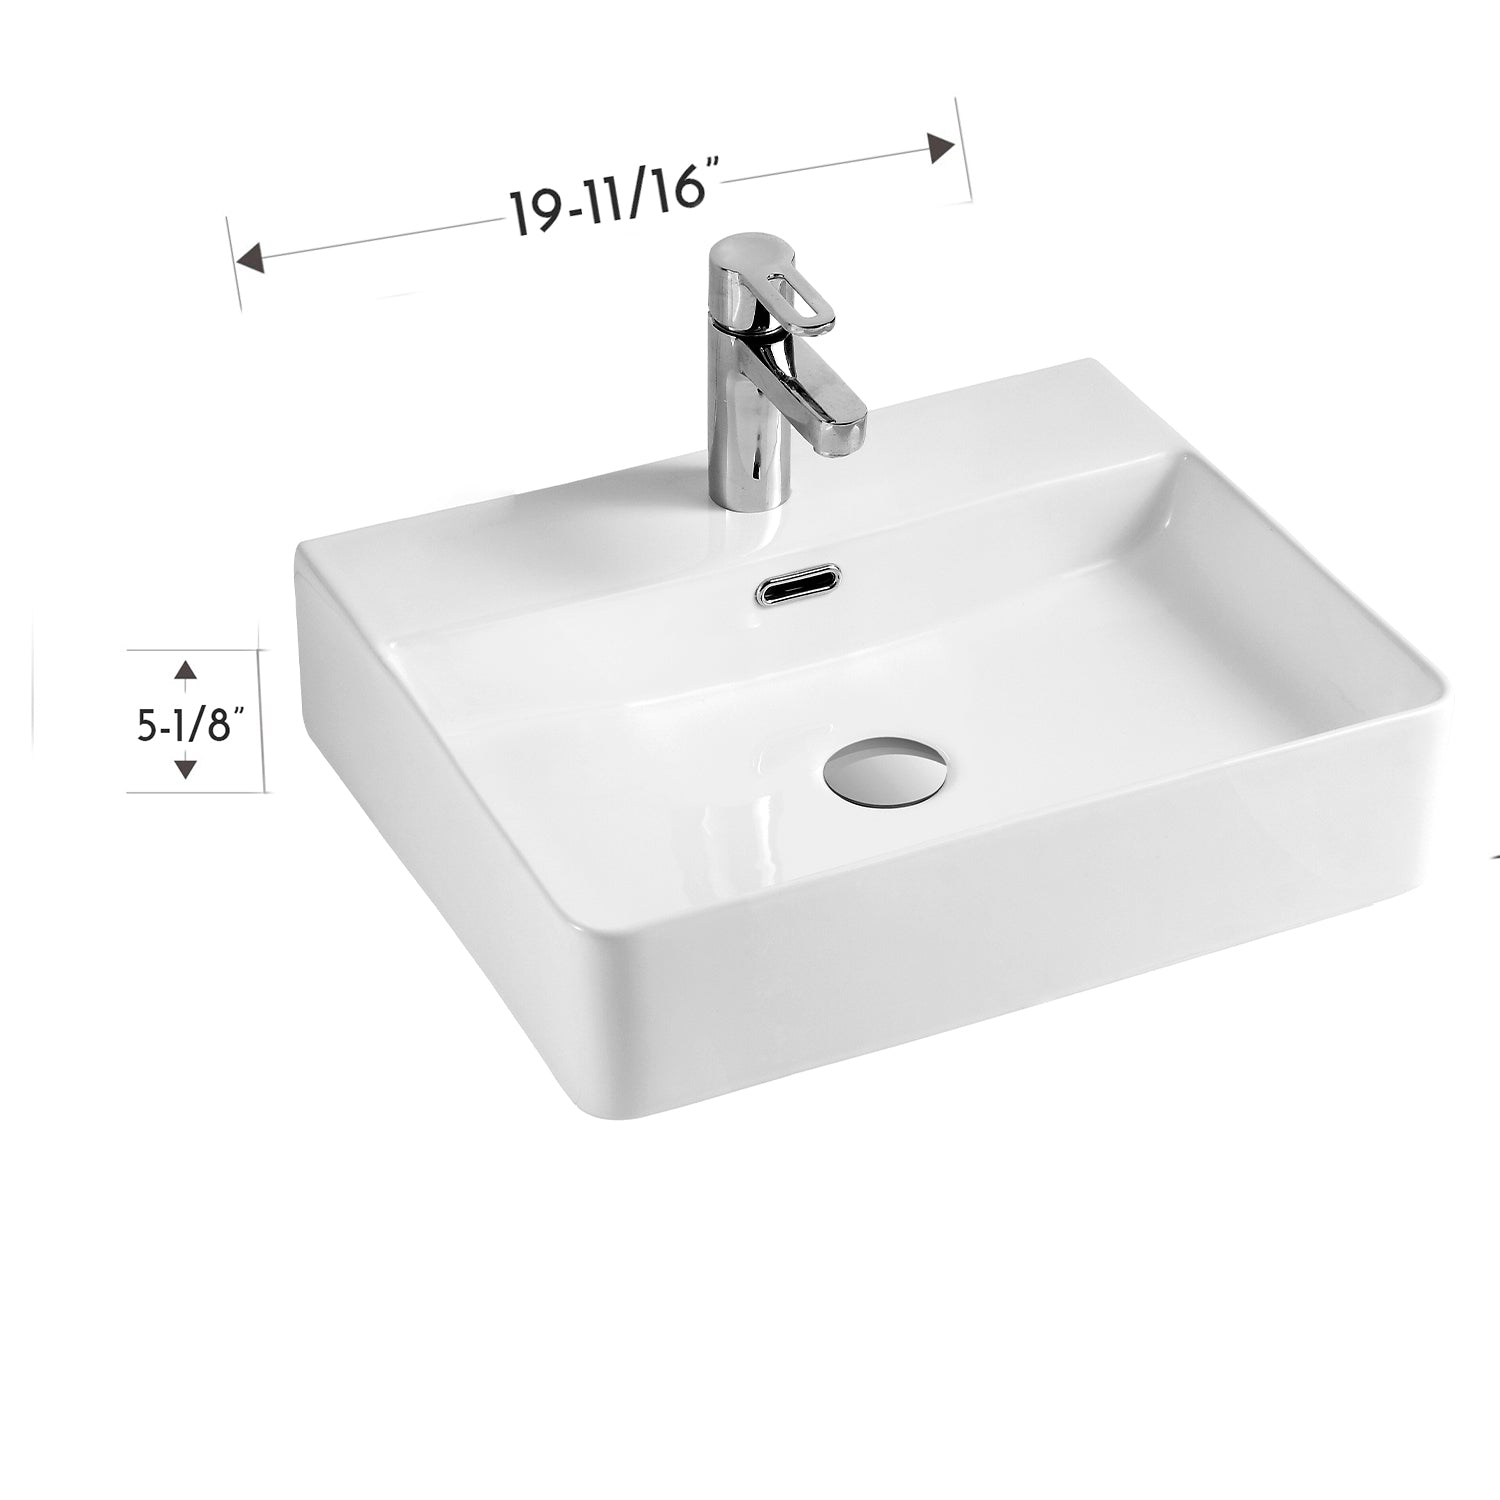 DAX  Ceramic Rectangle Bathroom Vessel Basin. Finish: White Matt, Glossy White, Matt Black - (20" x 16.5")(DAX-CL1275)